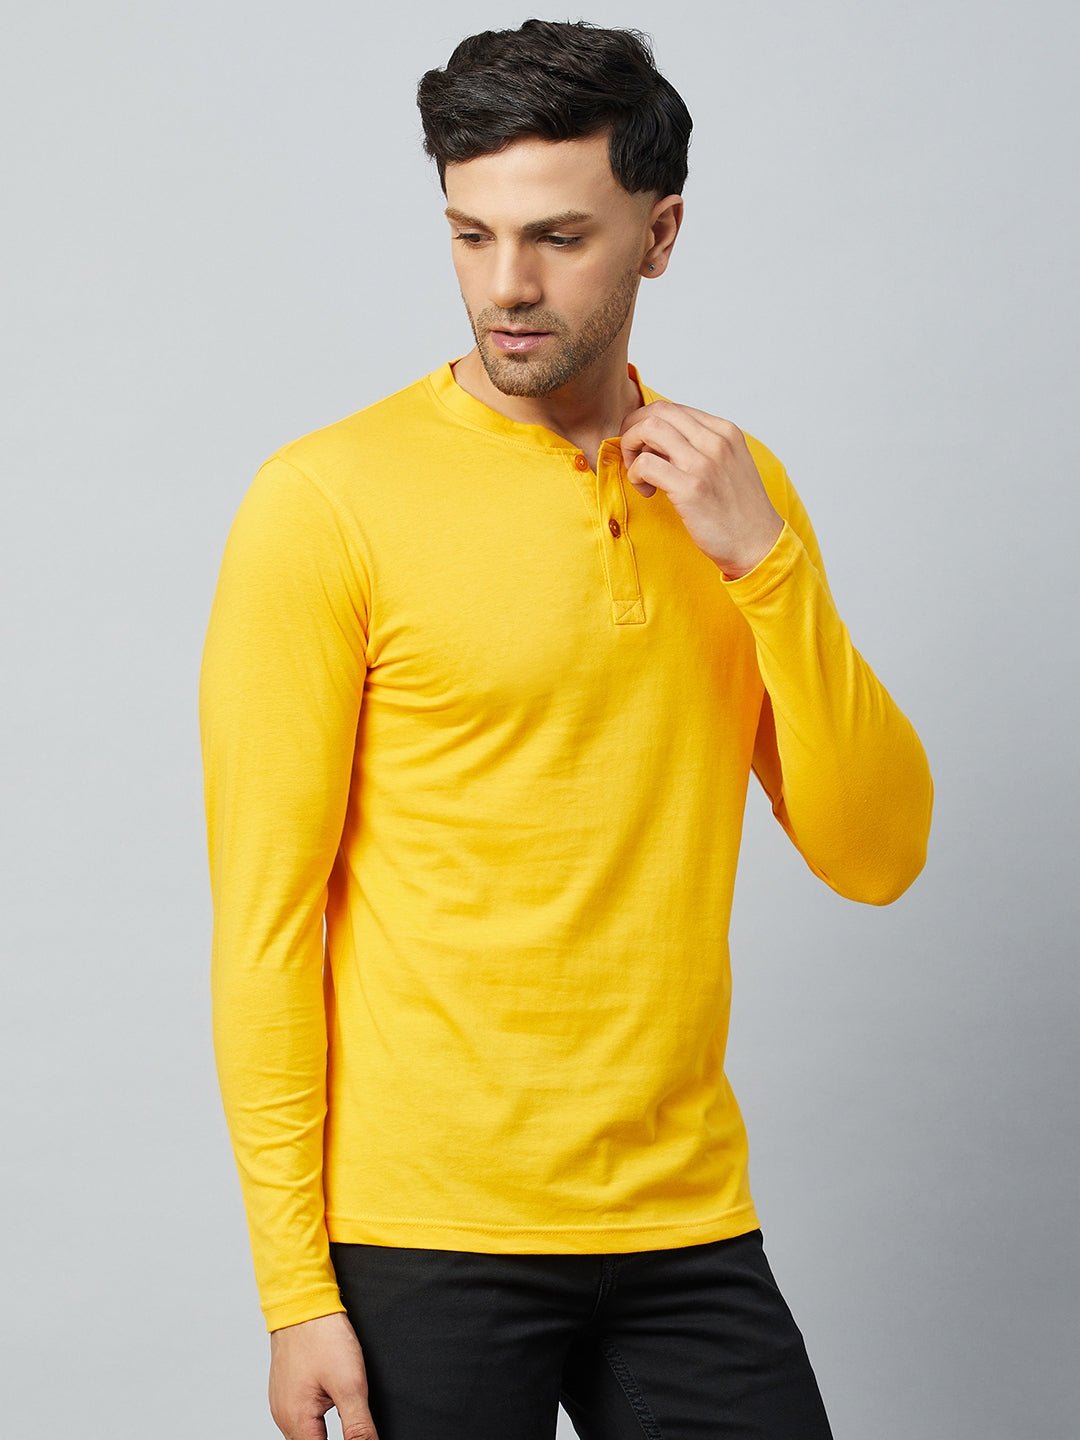 Yellow Solid Tshirt - clubyork